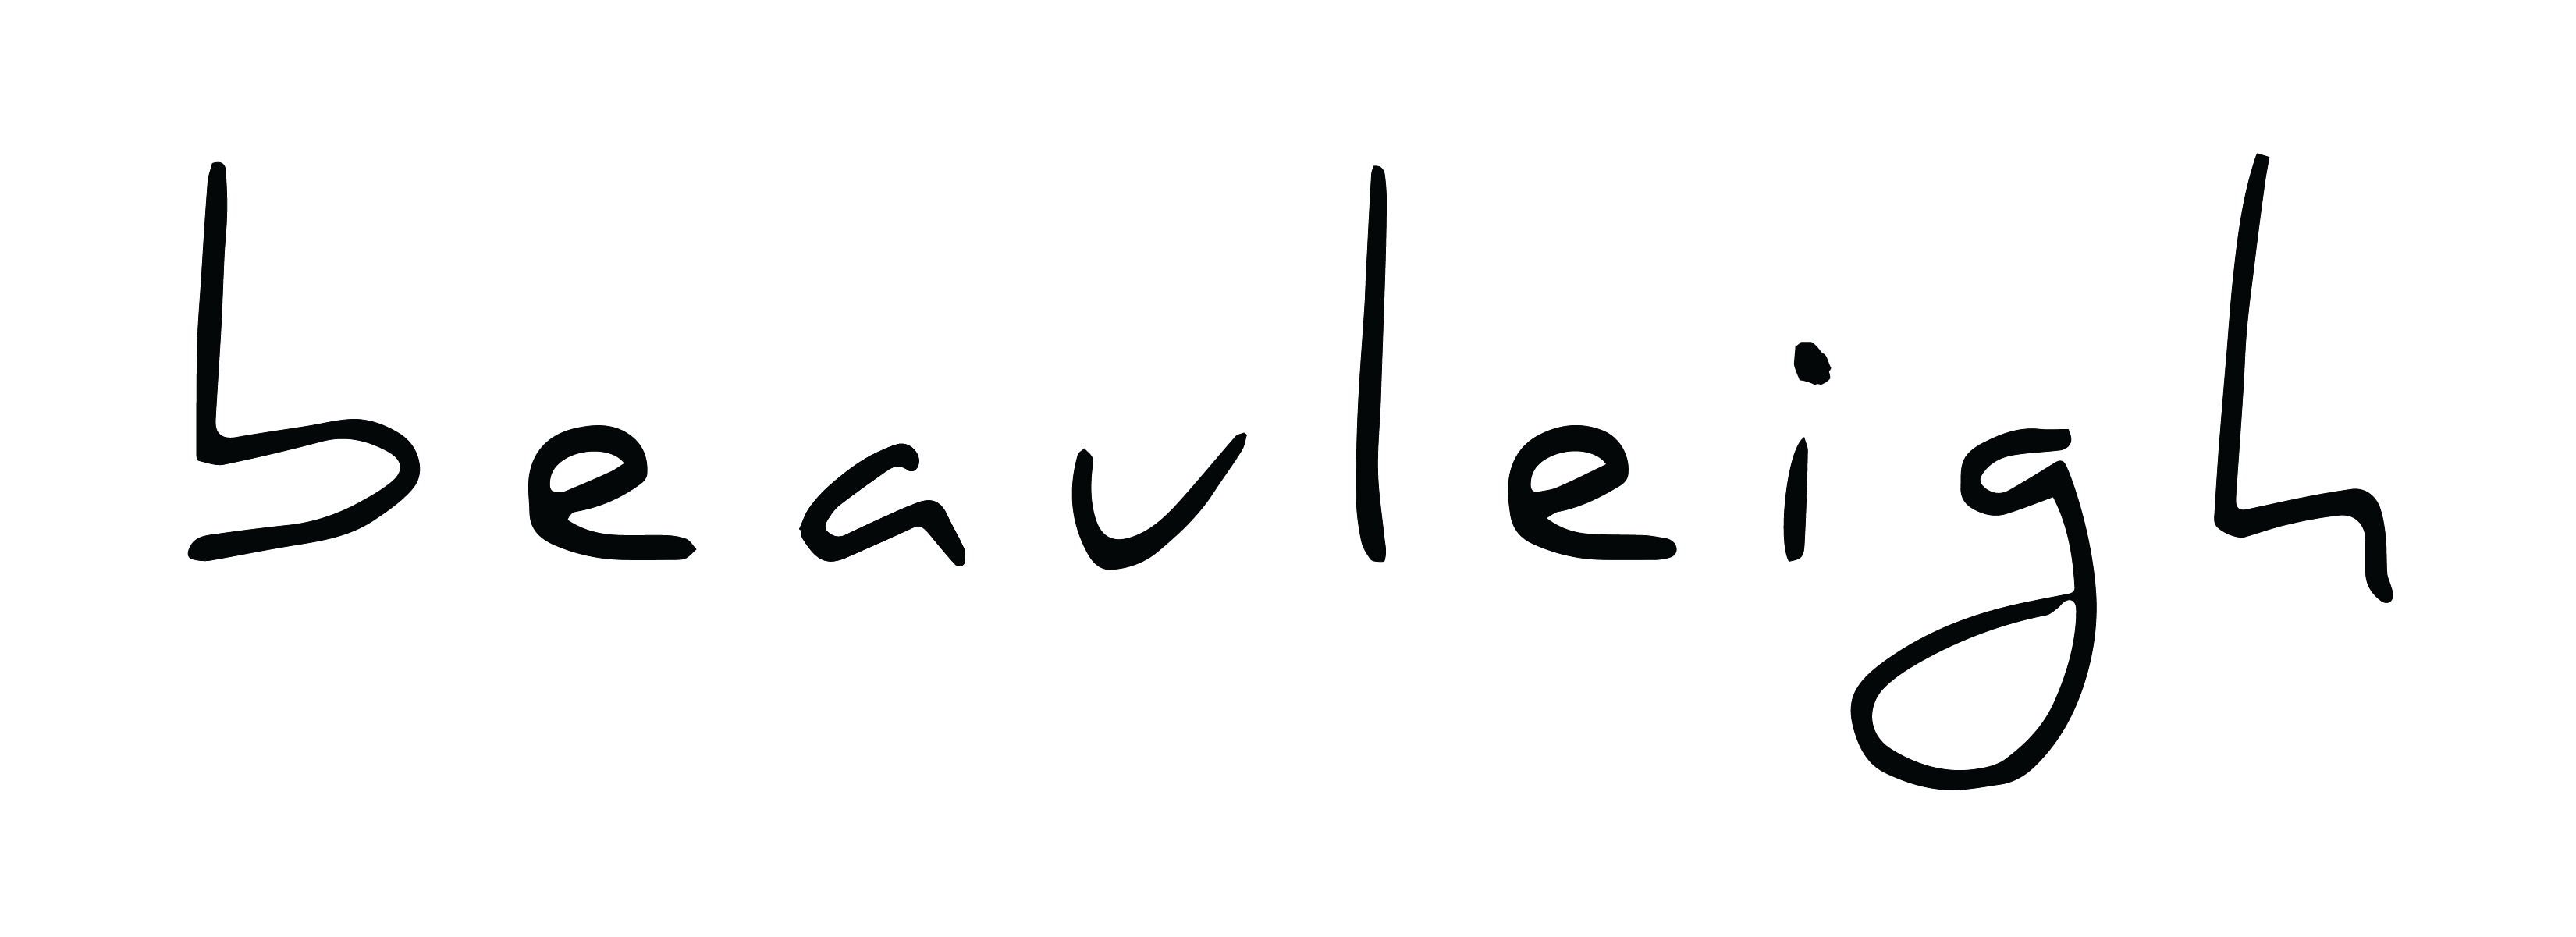 Beauleigh logo